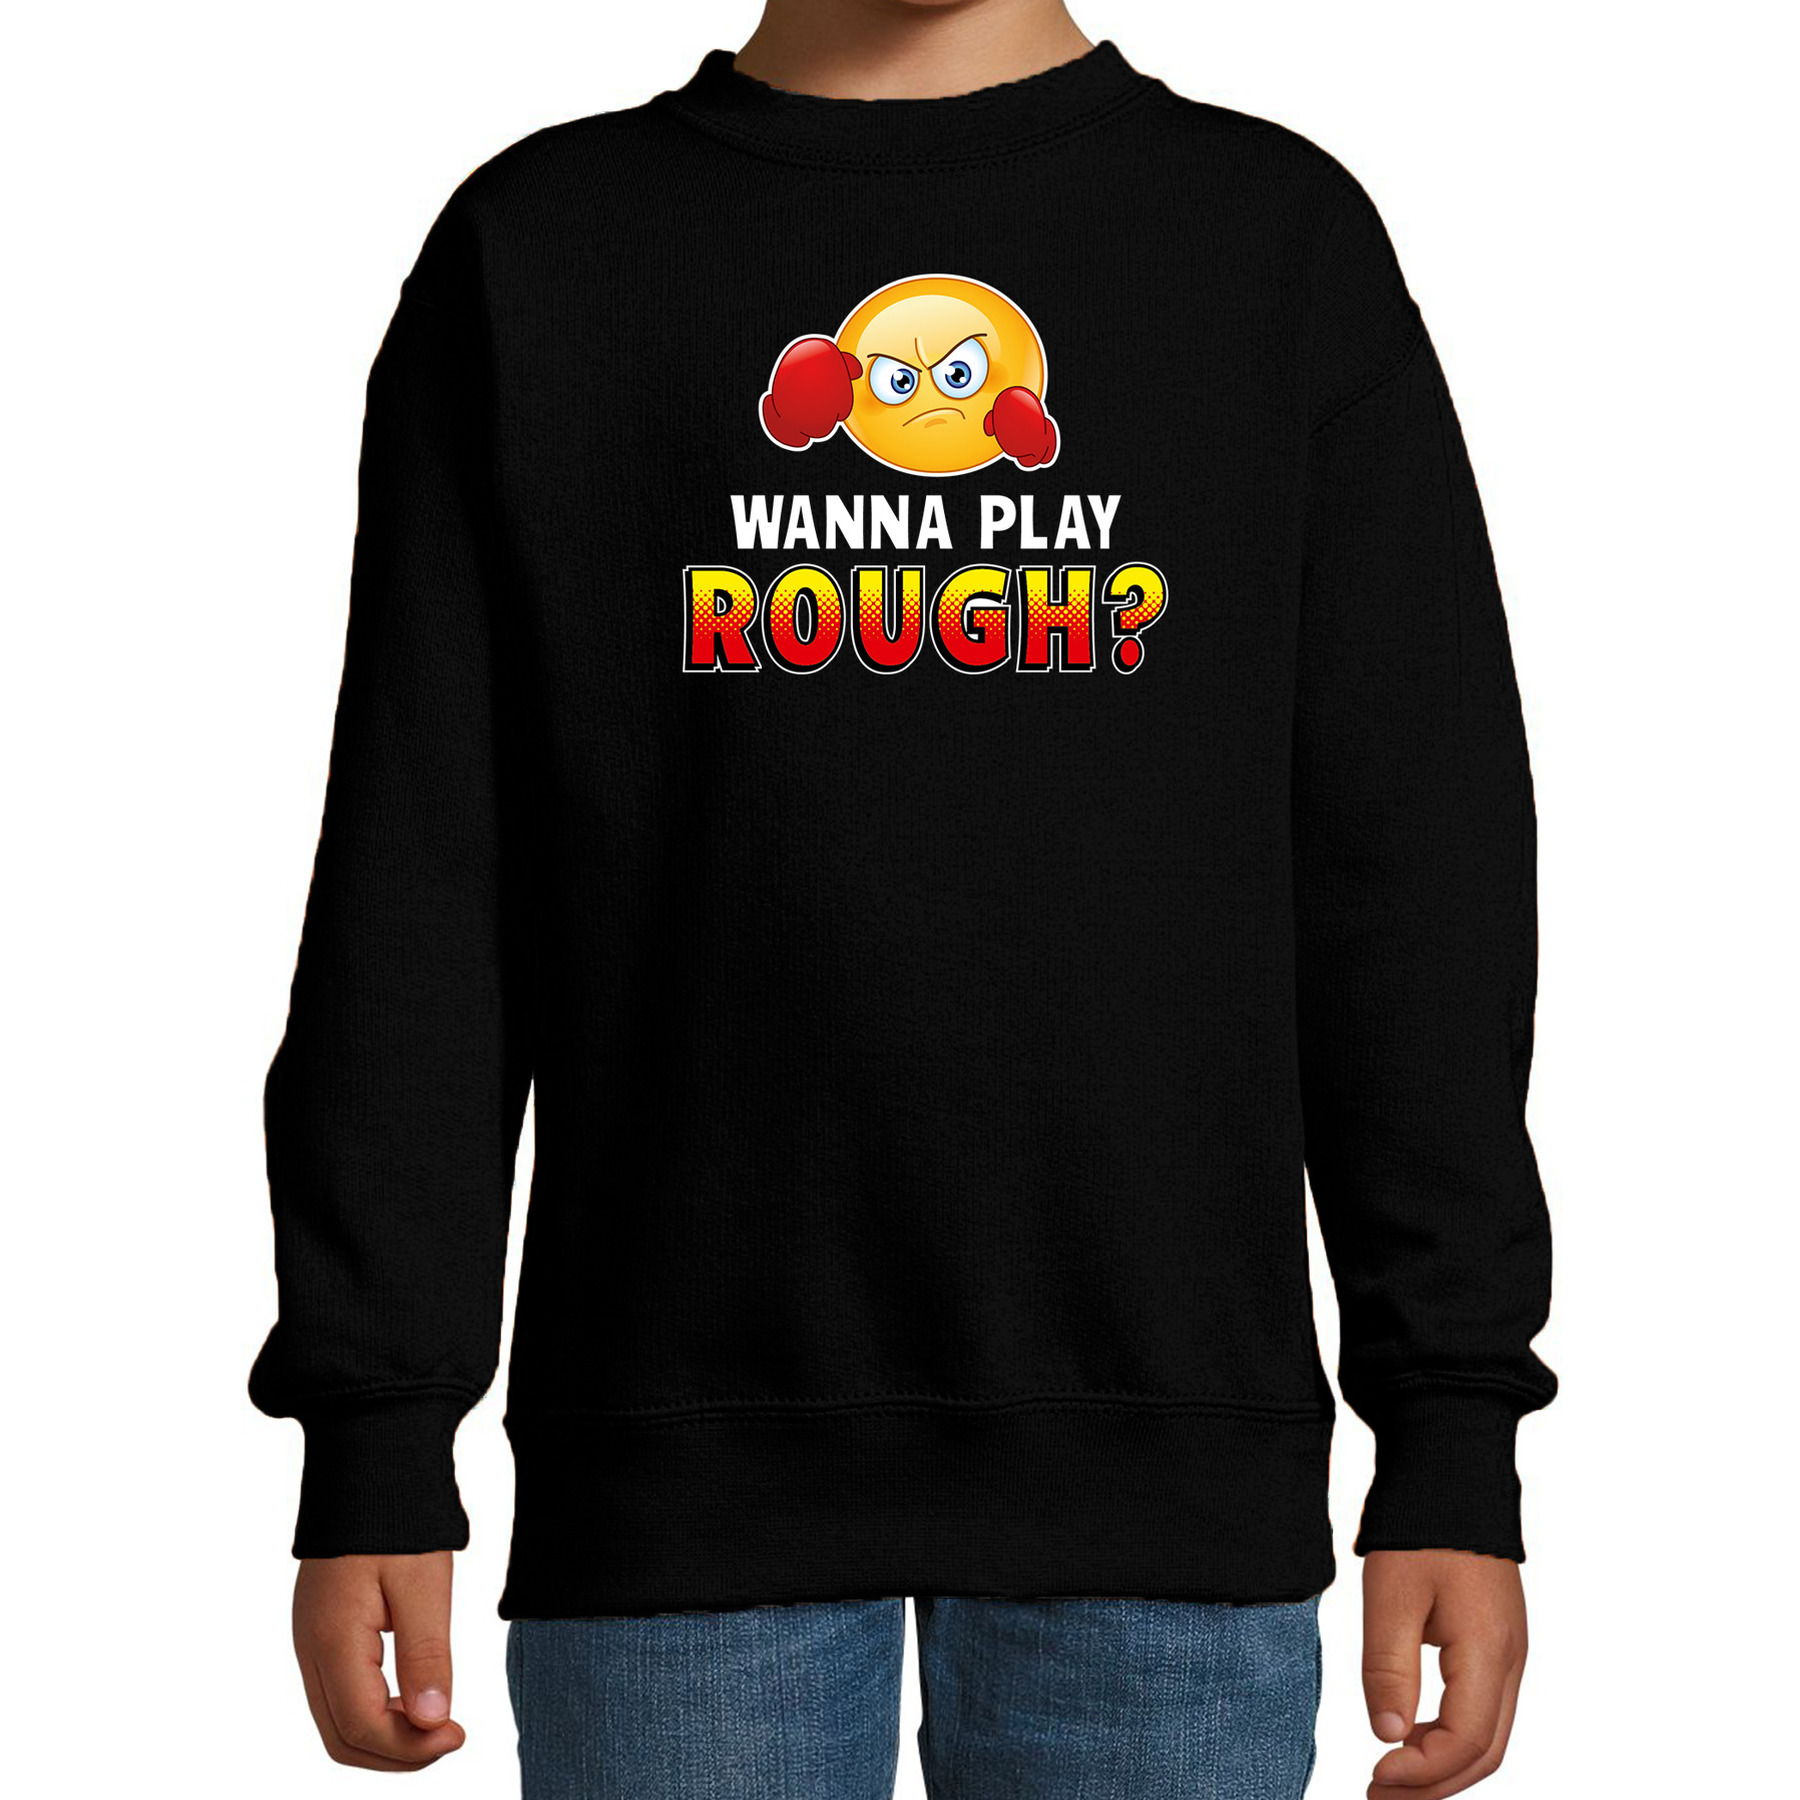 Funny emoticon sweater Wanna play rough zwart kids